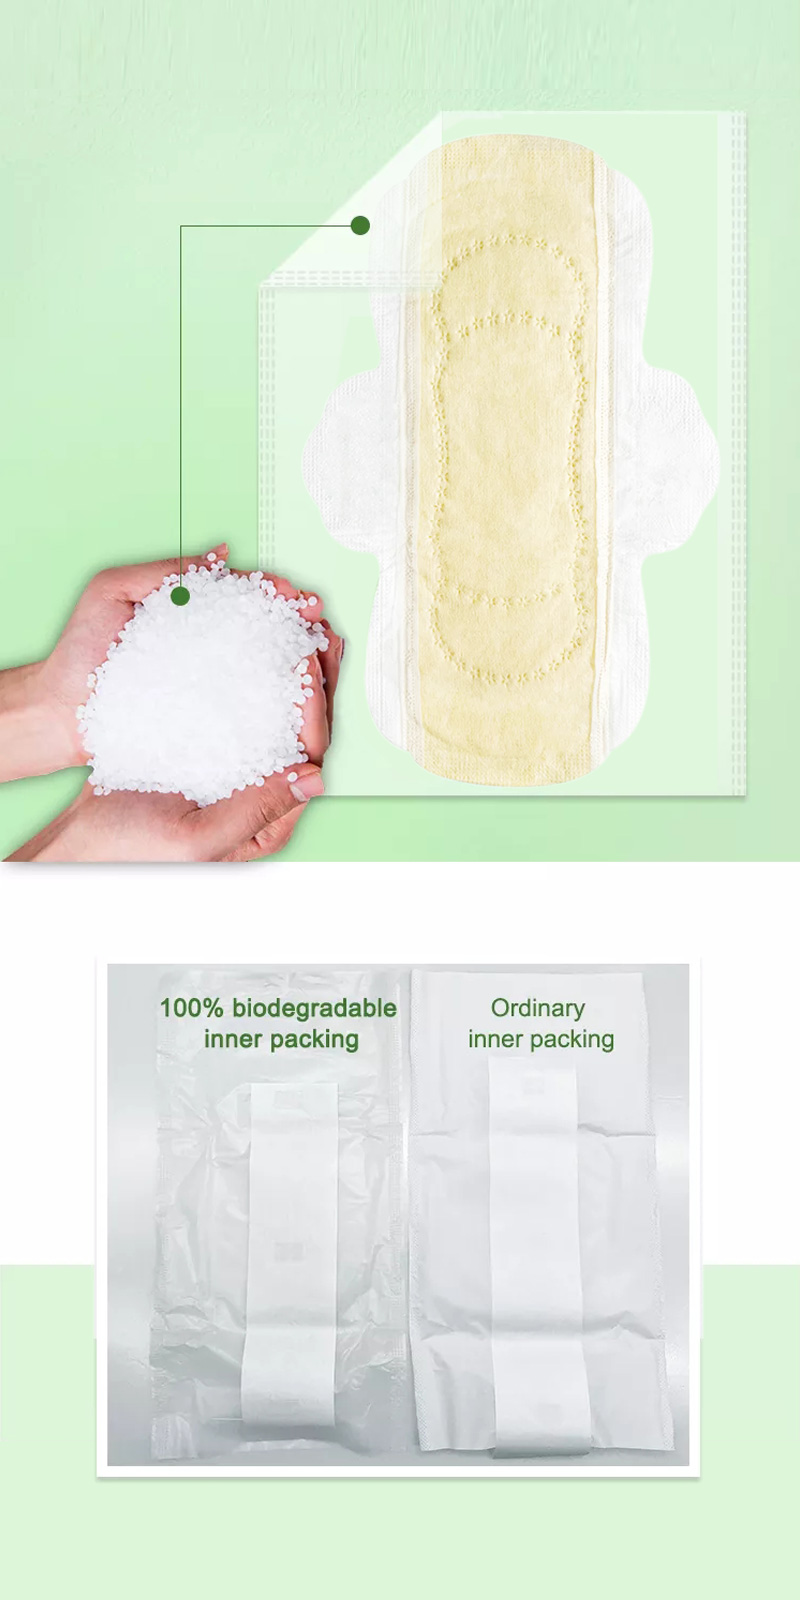 Biodegradowalna podpaska higieniczna dostosowana